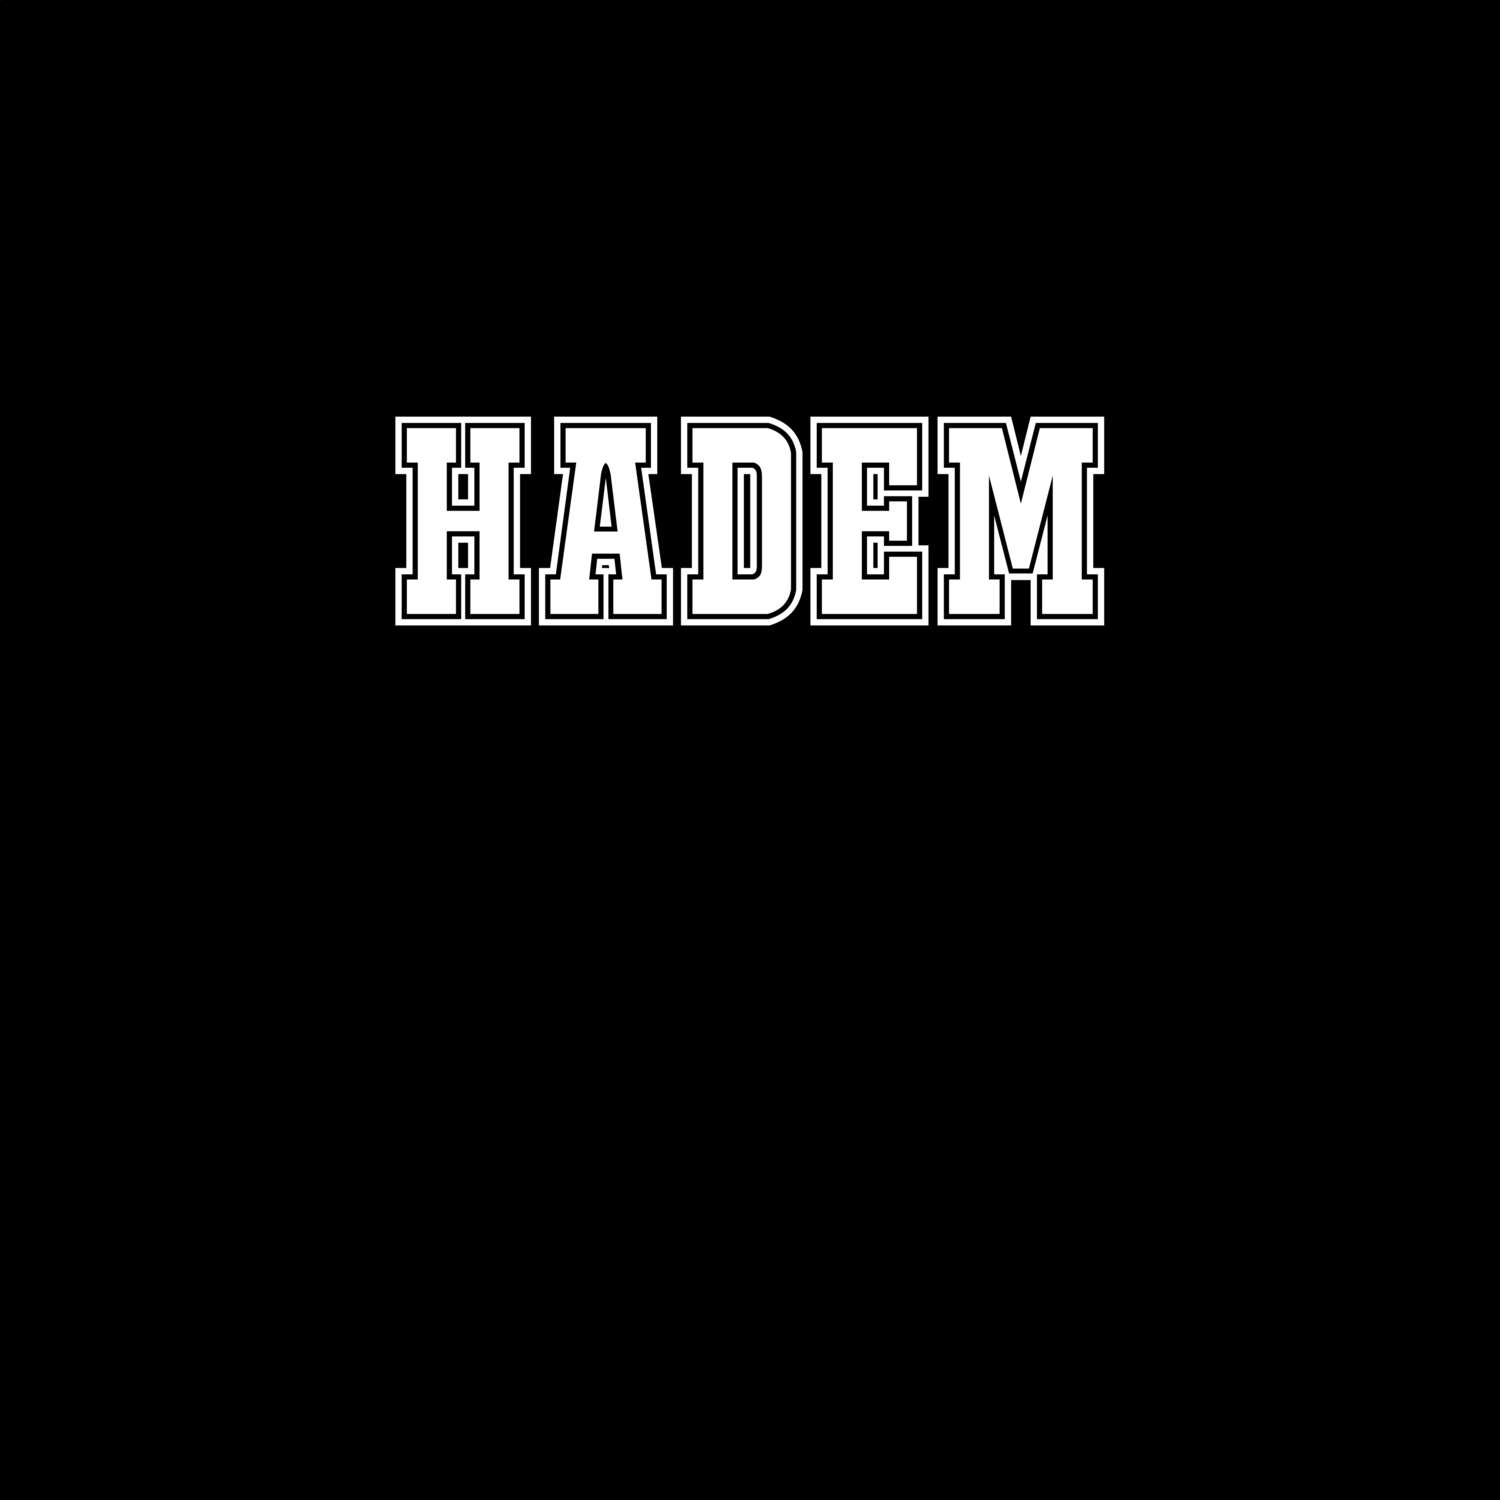 Hadem T-Shirt »Classic«